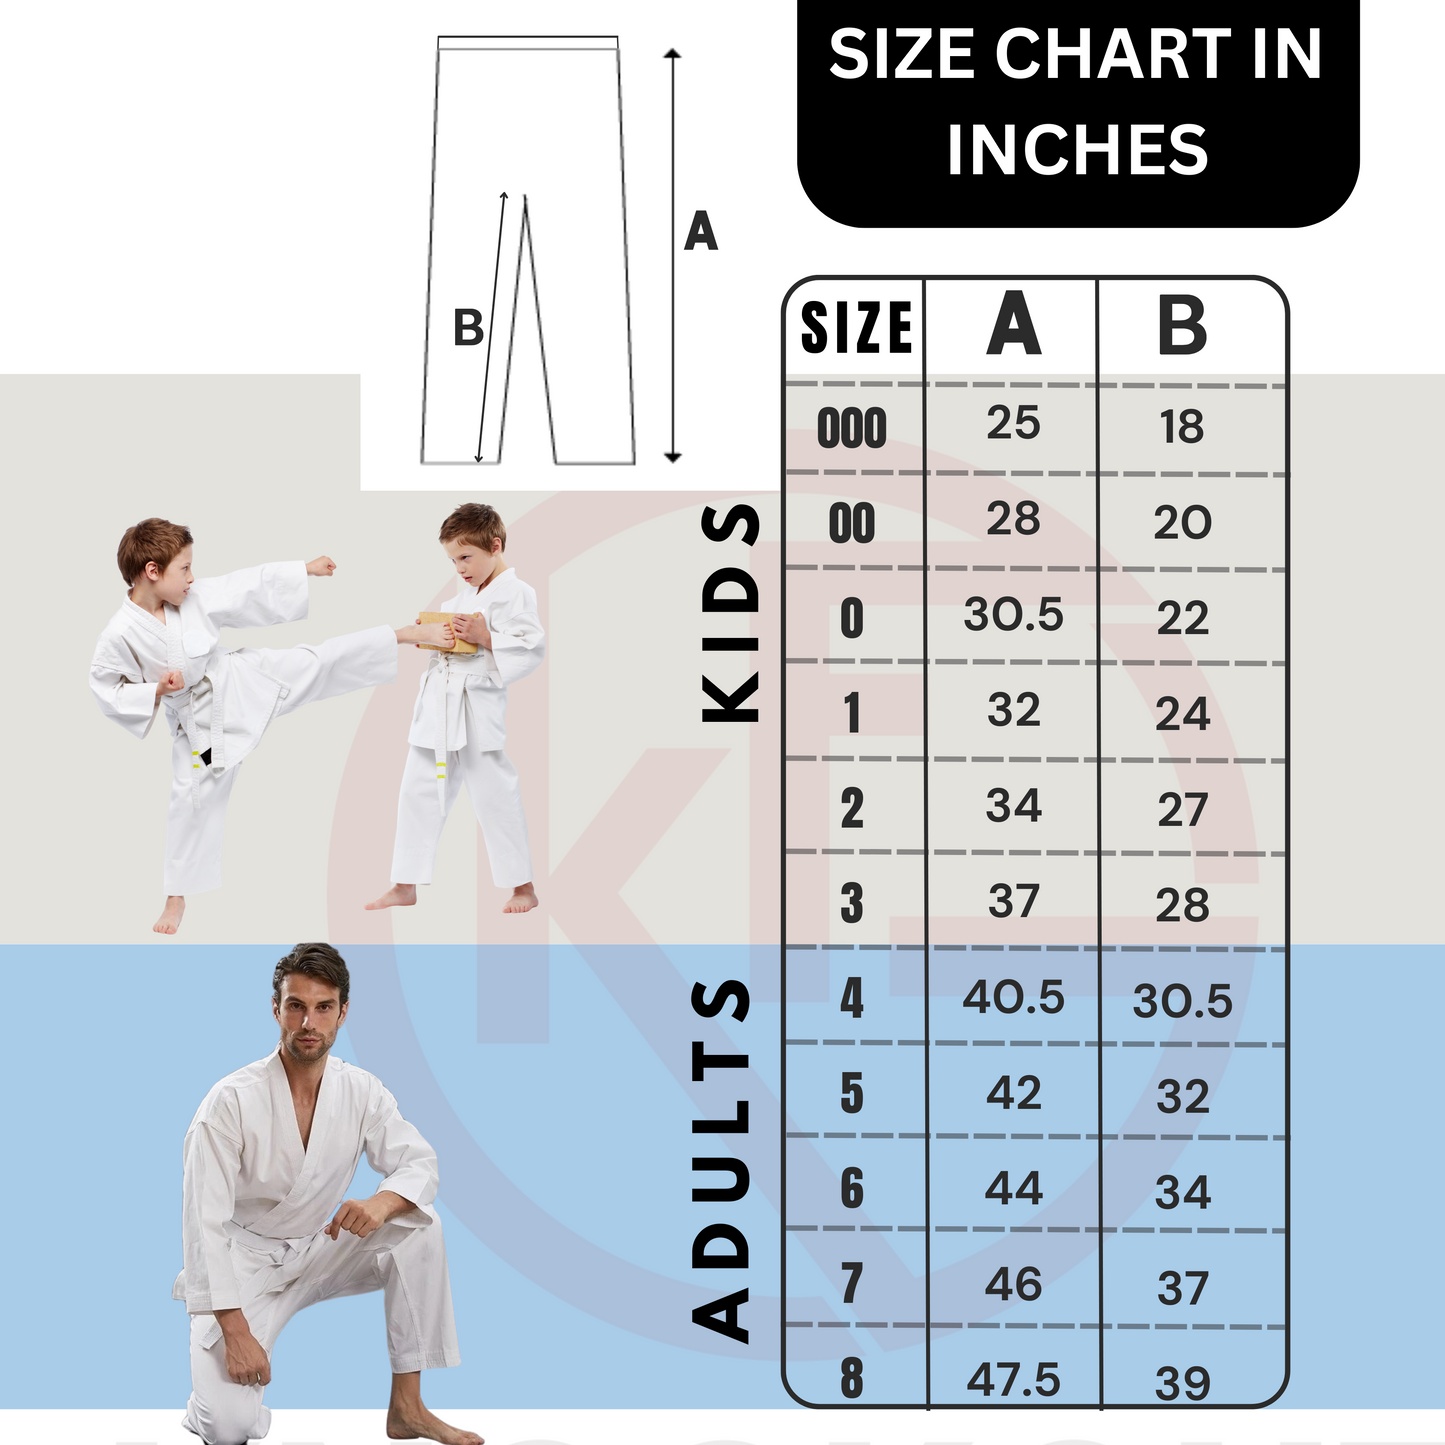 Karate Pants 7.5 oz Taekwondo Martial Arts Elastic Waist for Kids & Adults